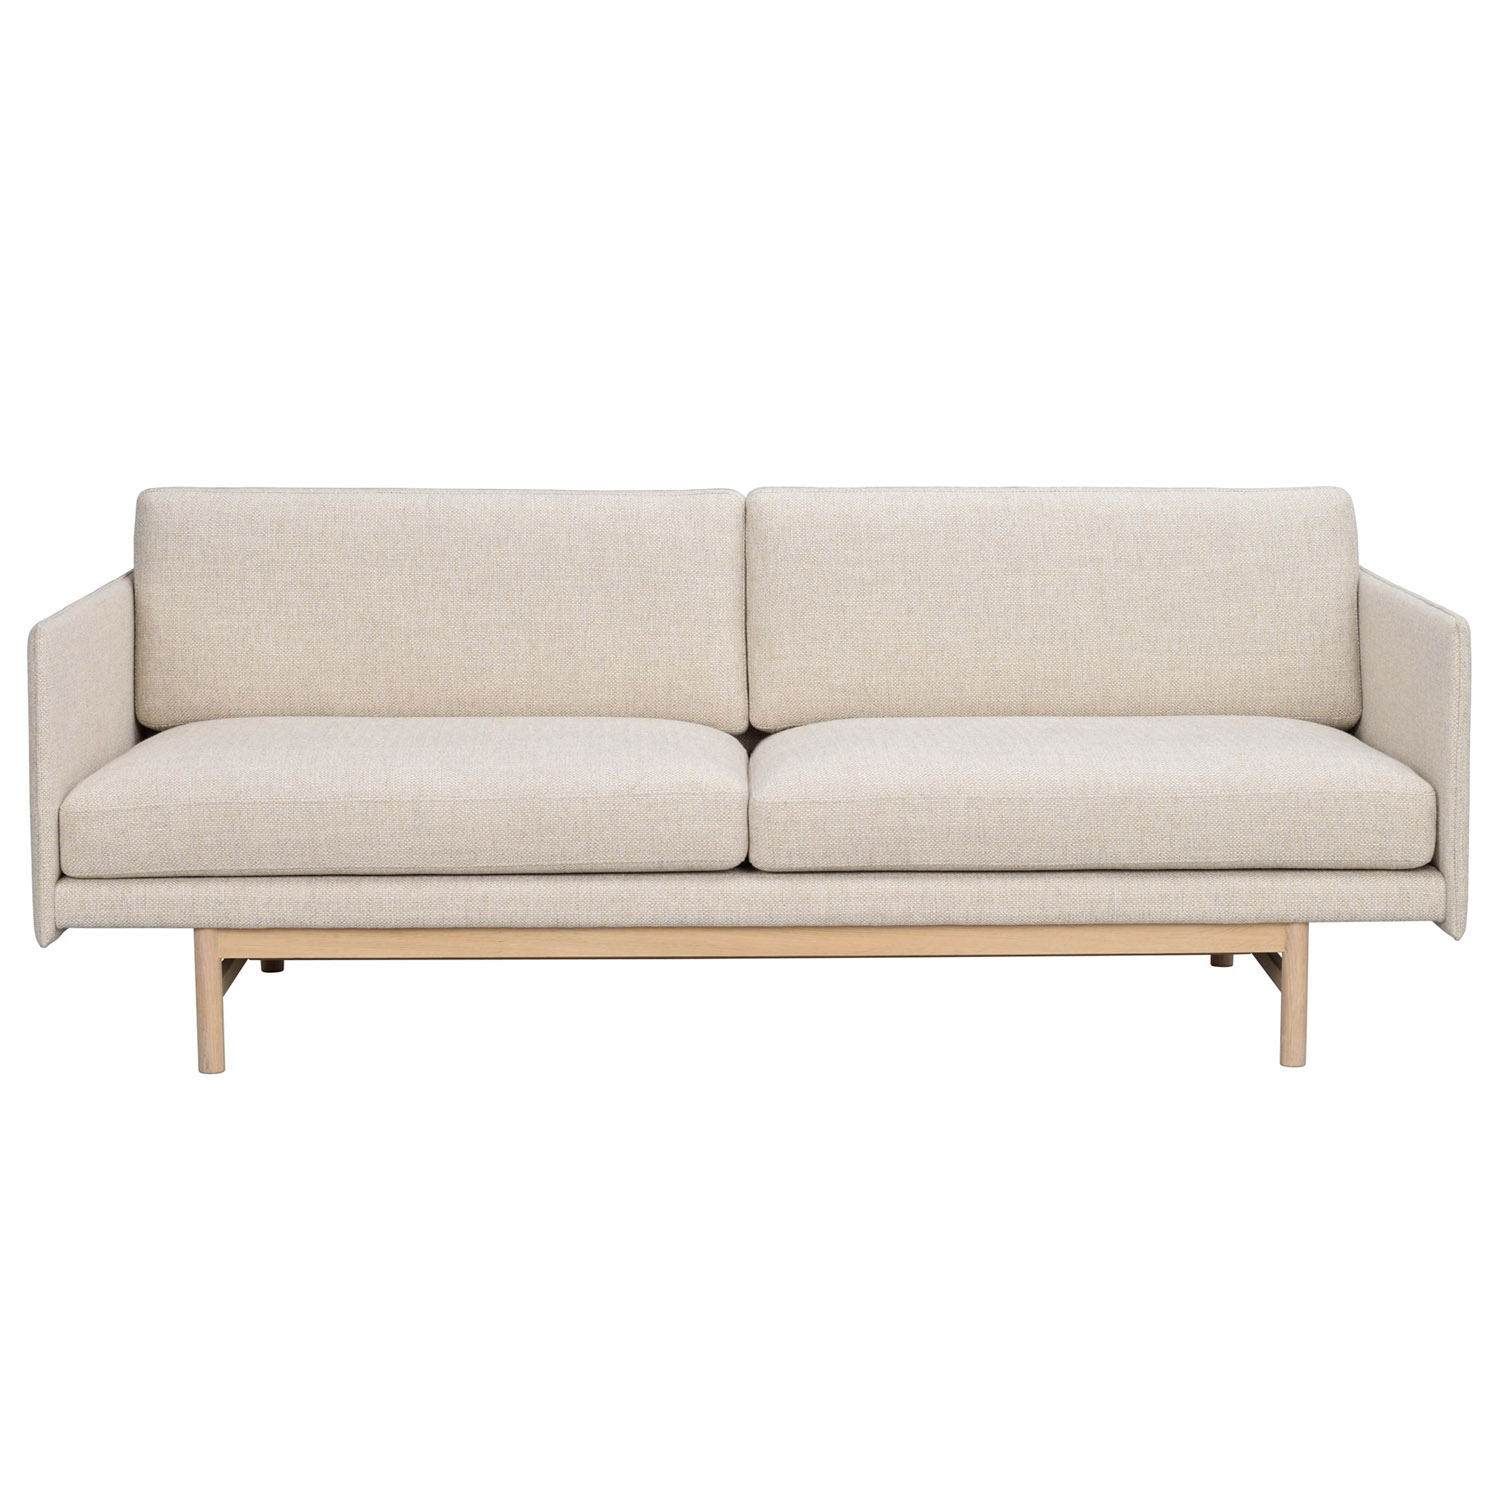 ROWICO Hammond sofa - beige stof og hvidpigmenteret egetræ